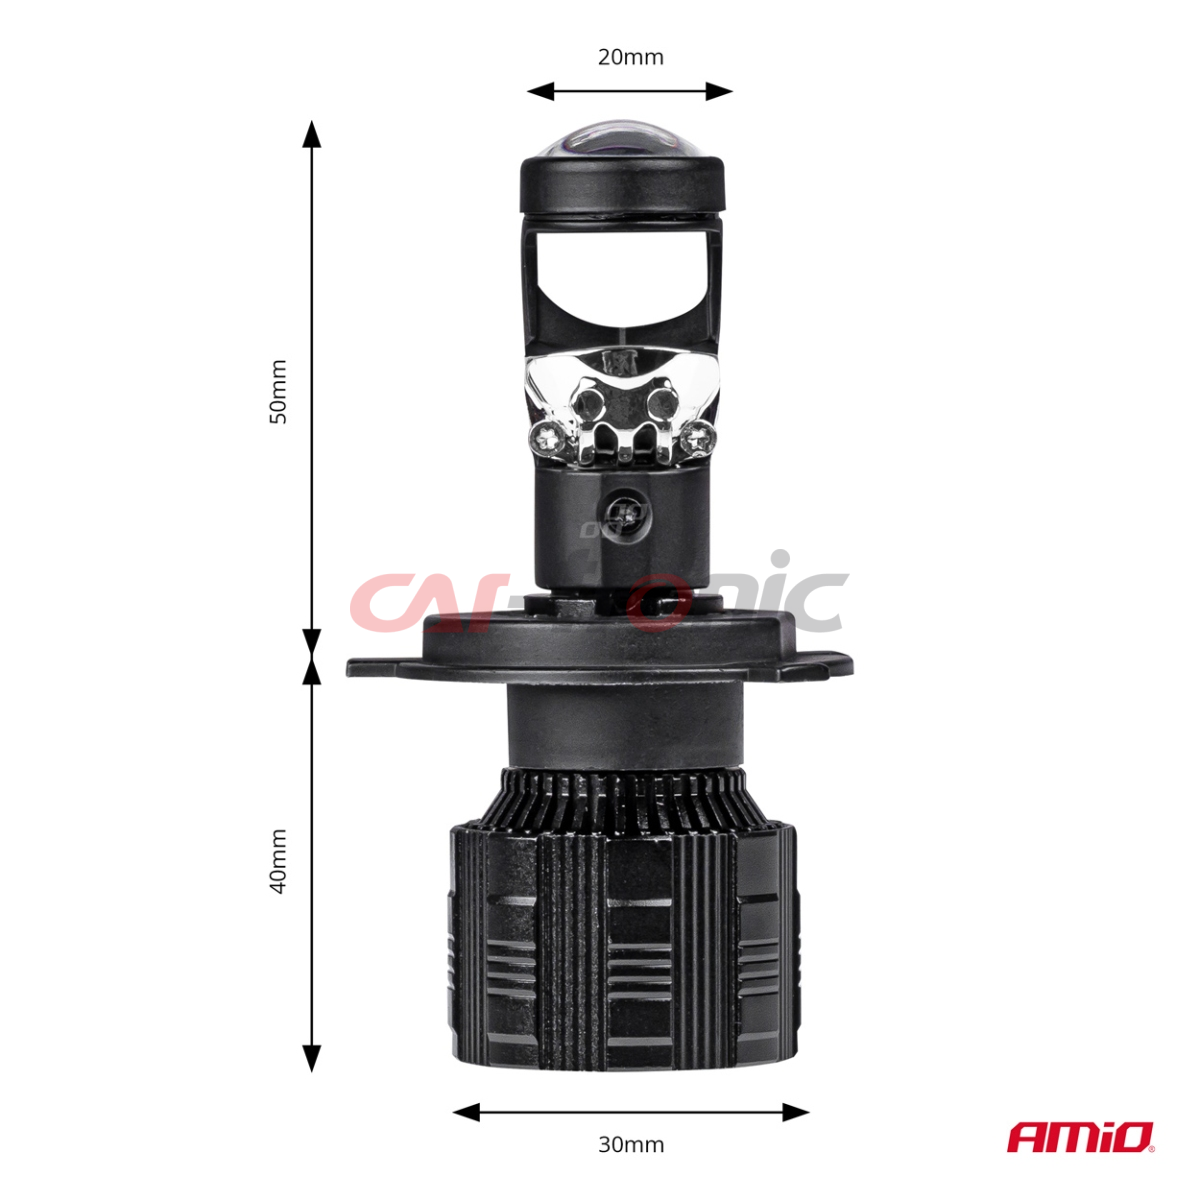 Żarówki samochodowe LED seria PL Lens H4/H19 soczewka 6000K Canbus AMIO-03667